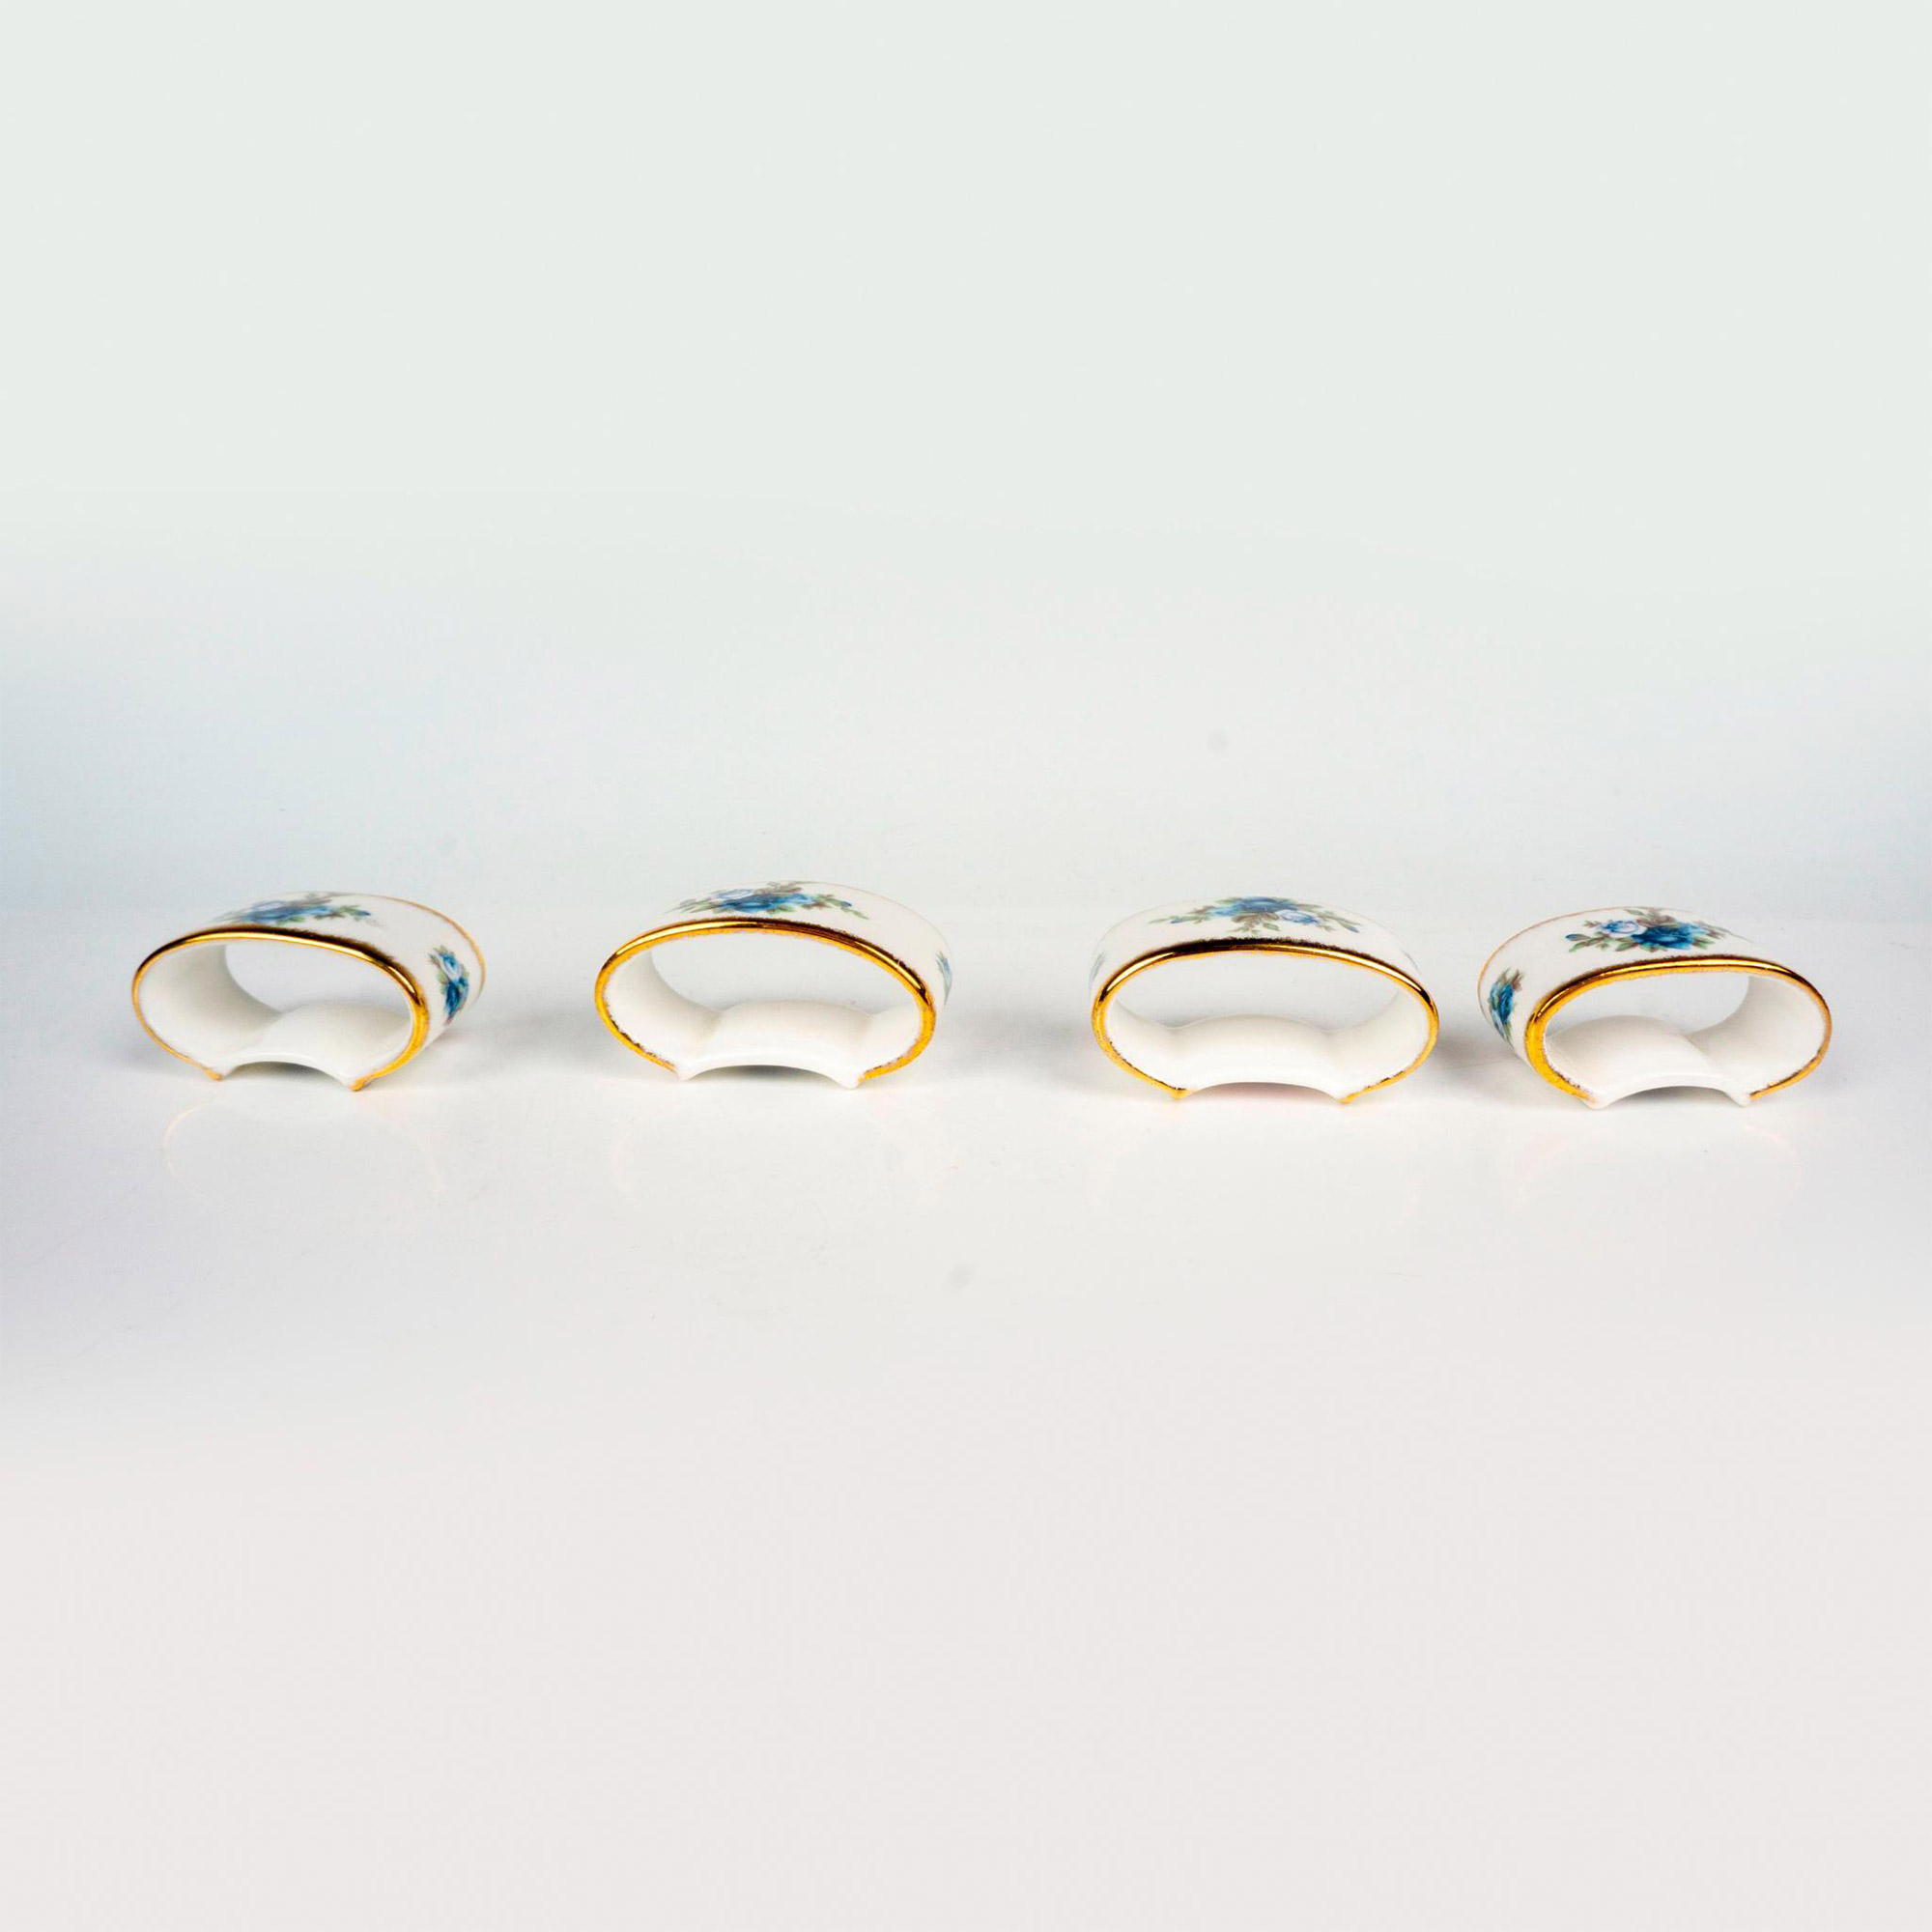 Set of 4 Royal Albert Napkin Rings, Moonlight Rose - Image 3 of 4